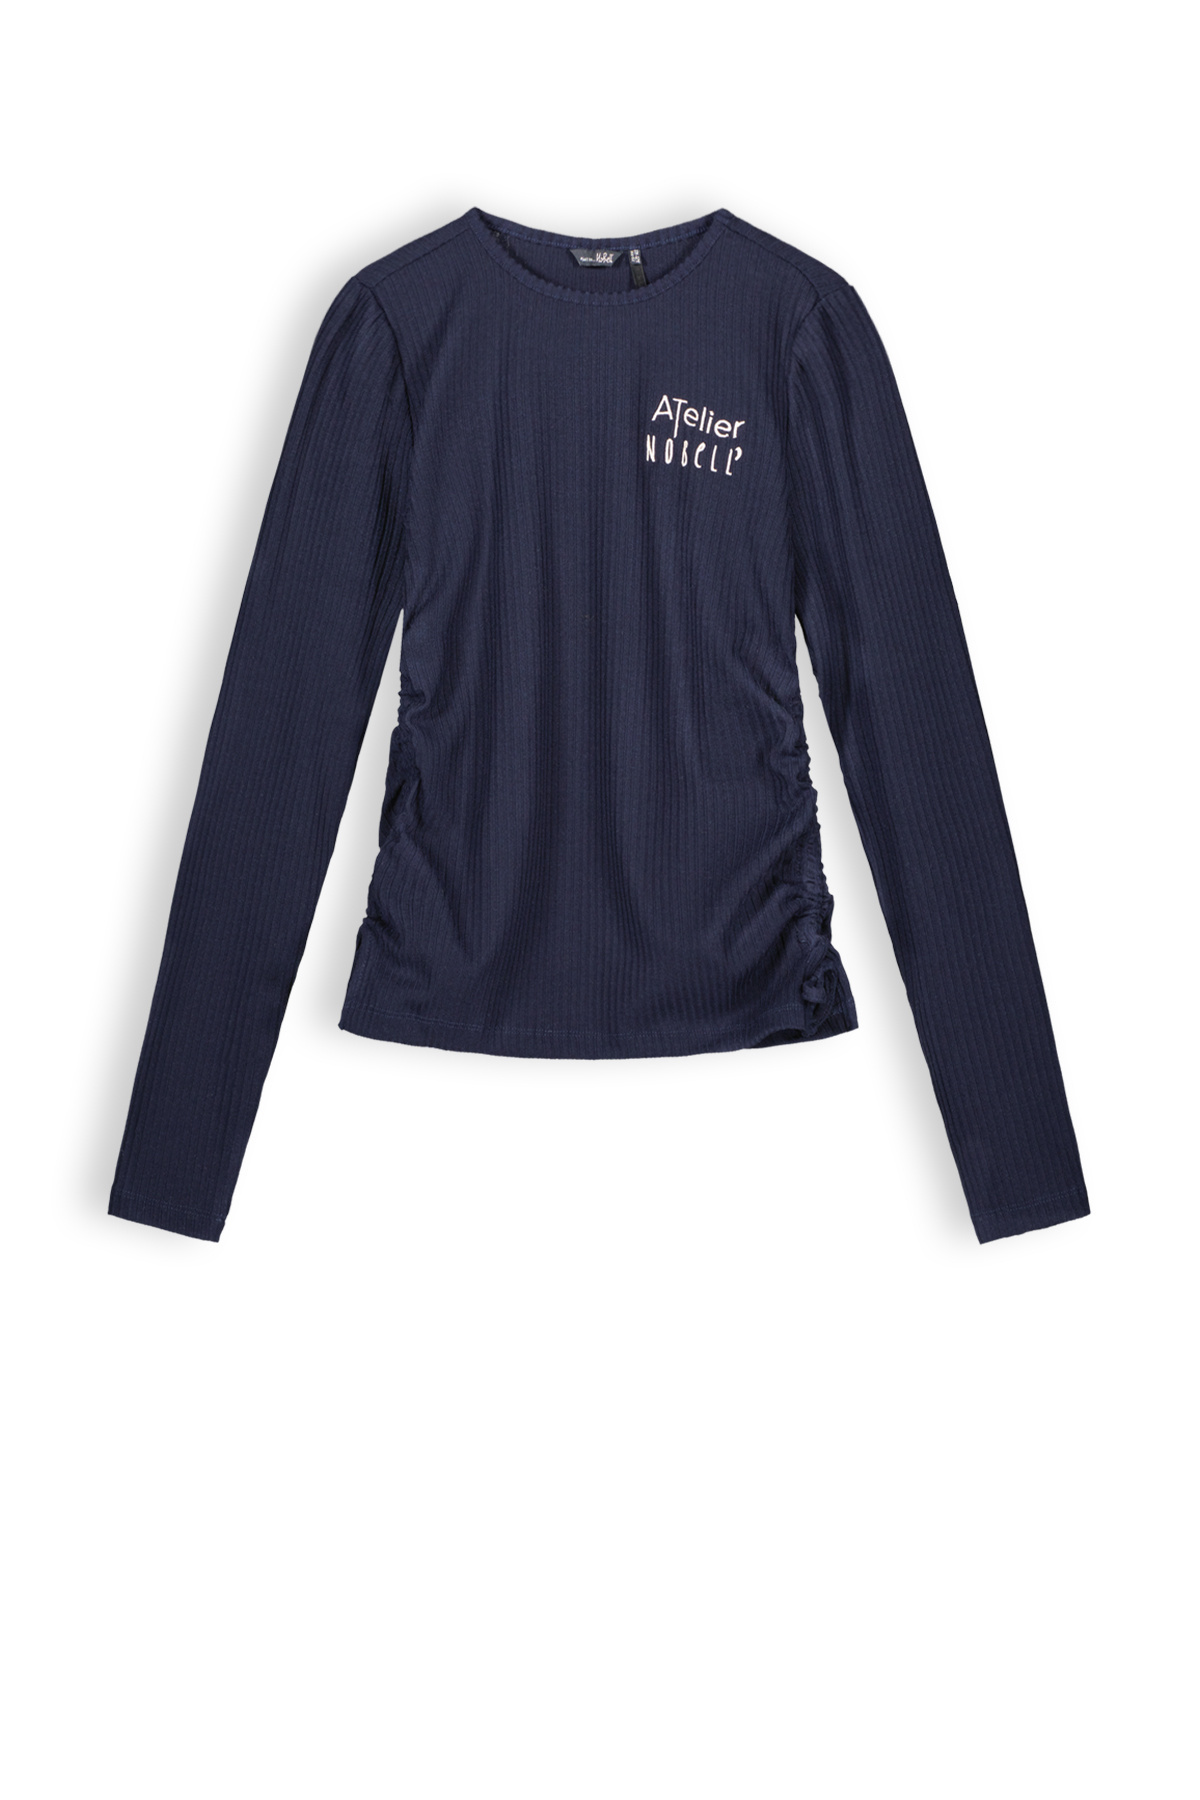 NoBell Meisjes shirt soft rib jersey - Koya - Navy blauw